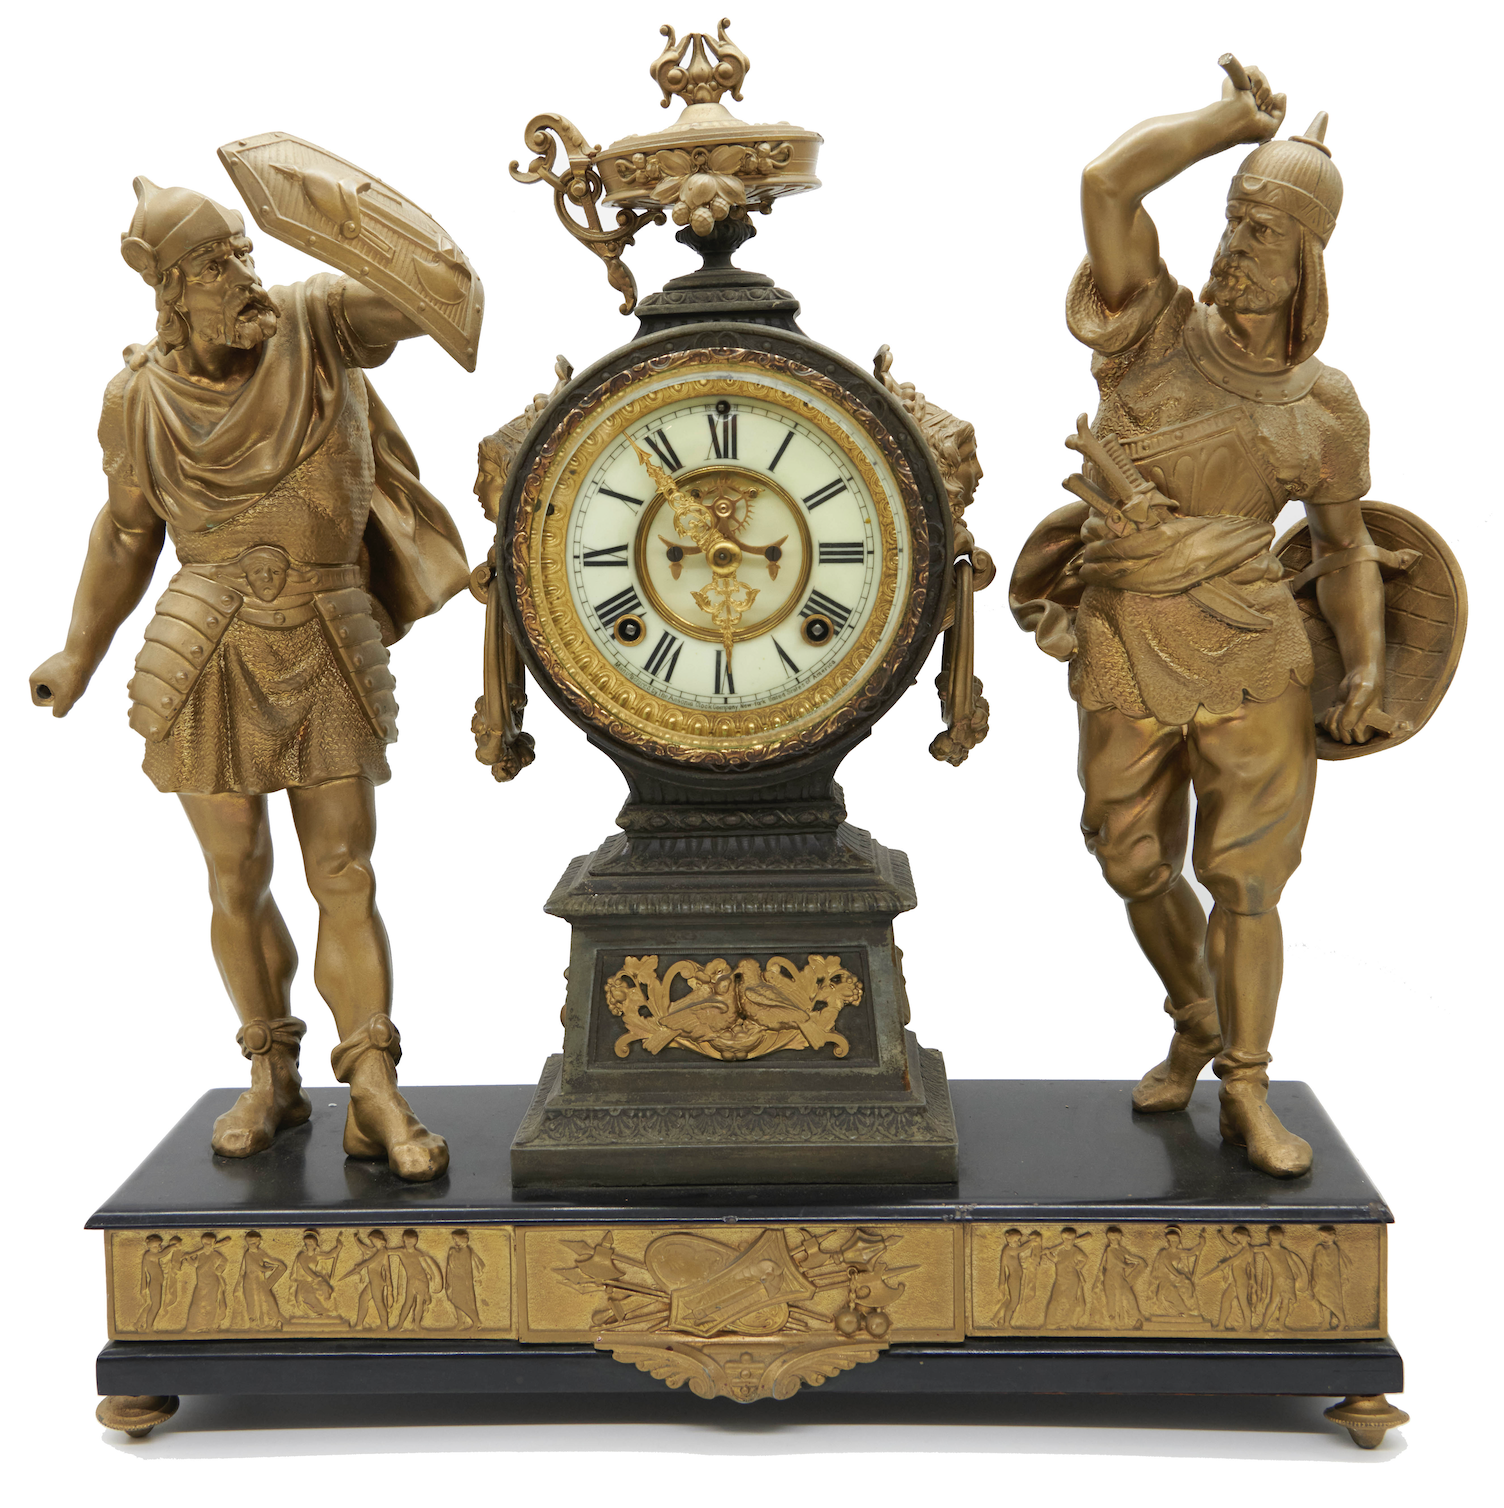 Ansonia chiming figural mantel clock, $768